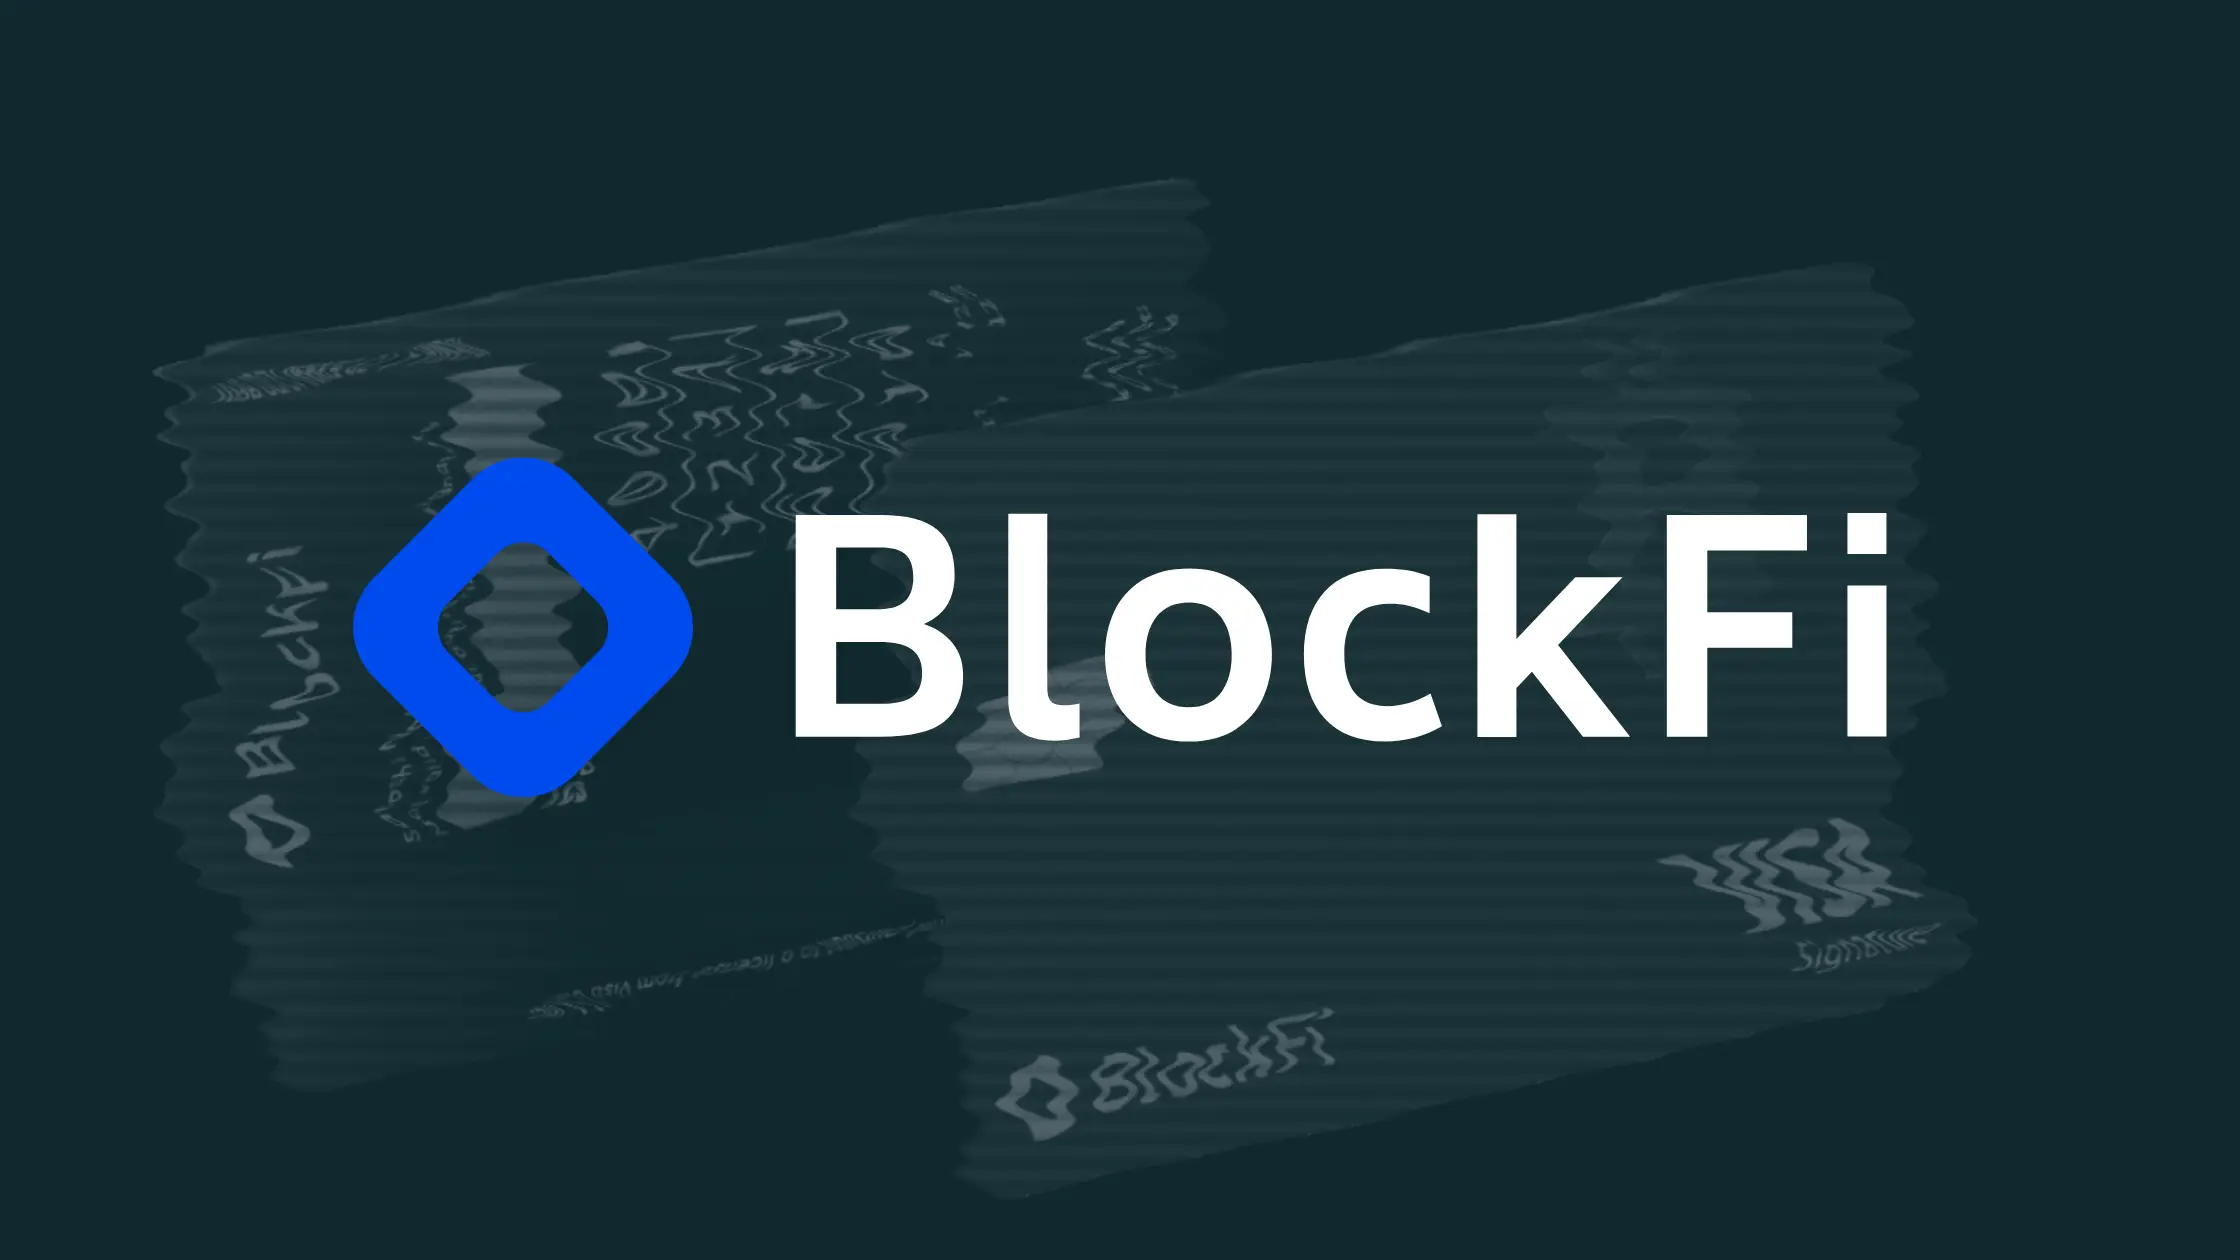 BlockFi Review: Does BlockFi Work? Is It Legit or Too Risky? - Observer